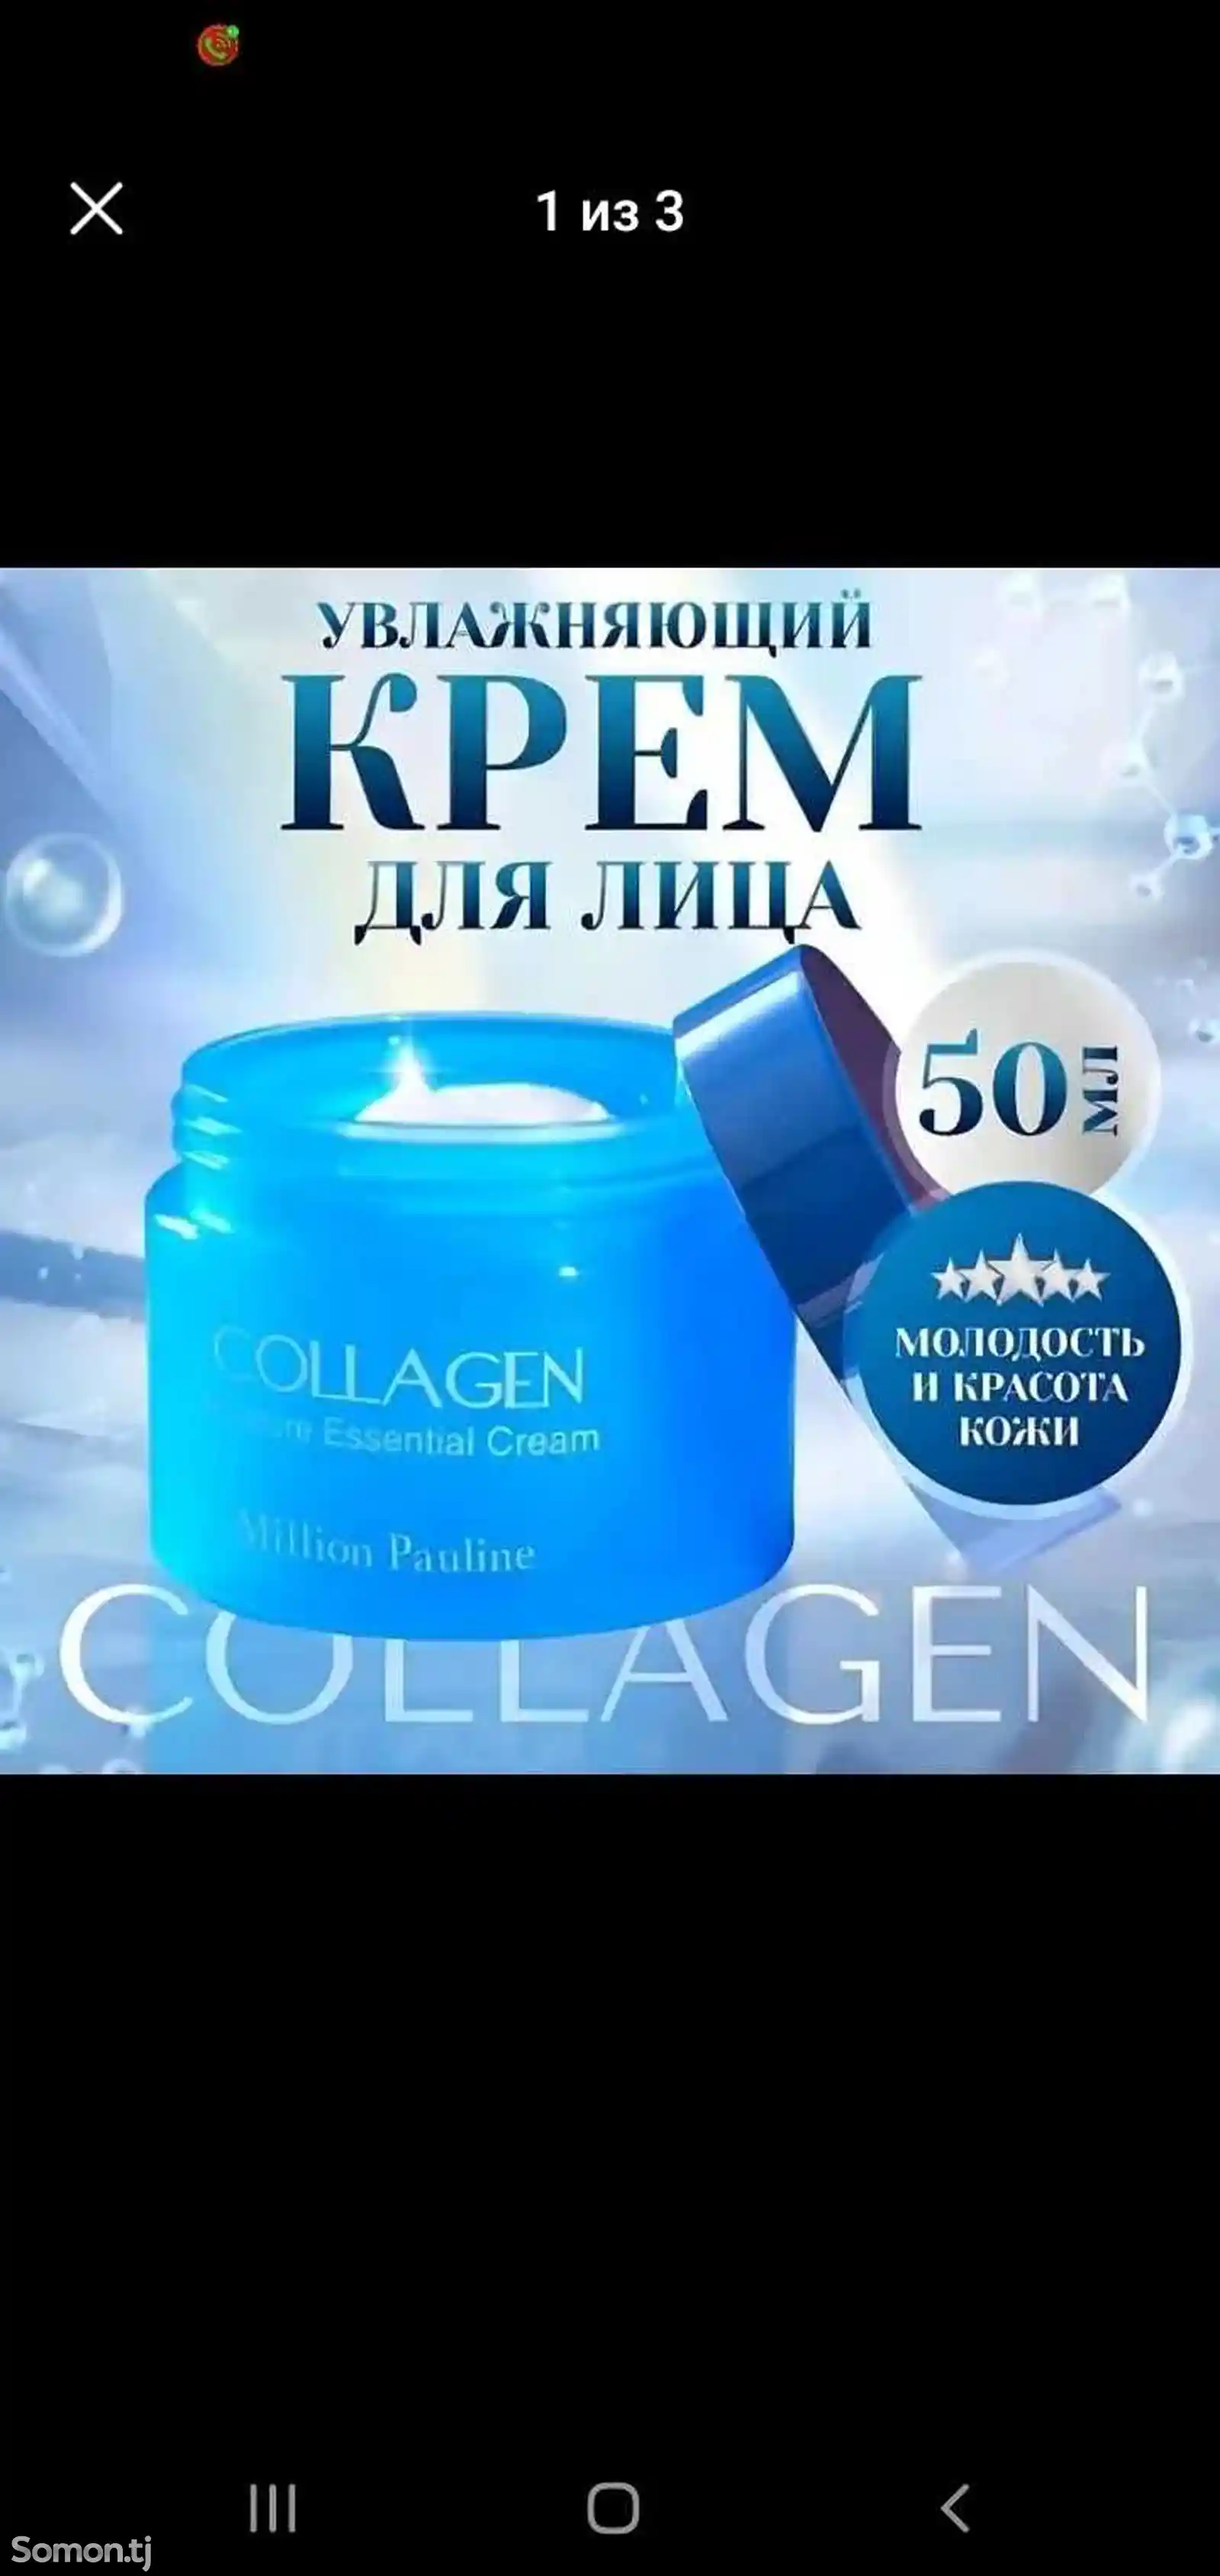 Омолаживаюшый крем Колаген-1